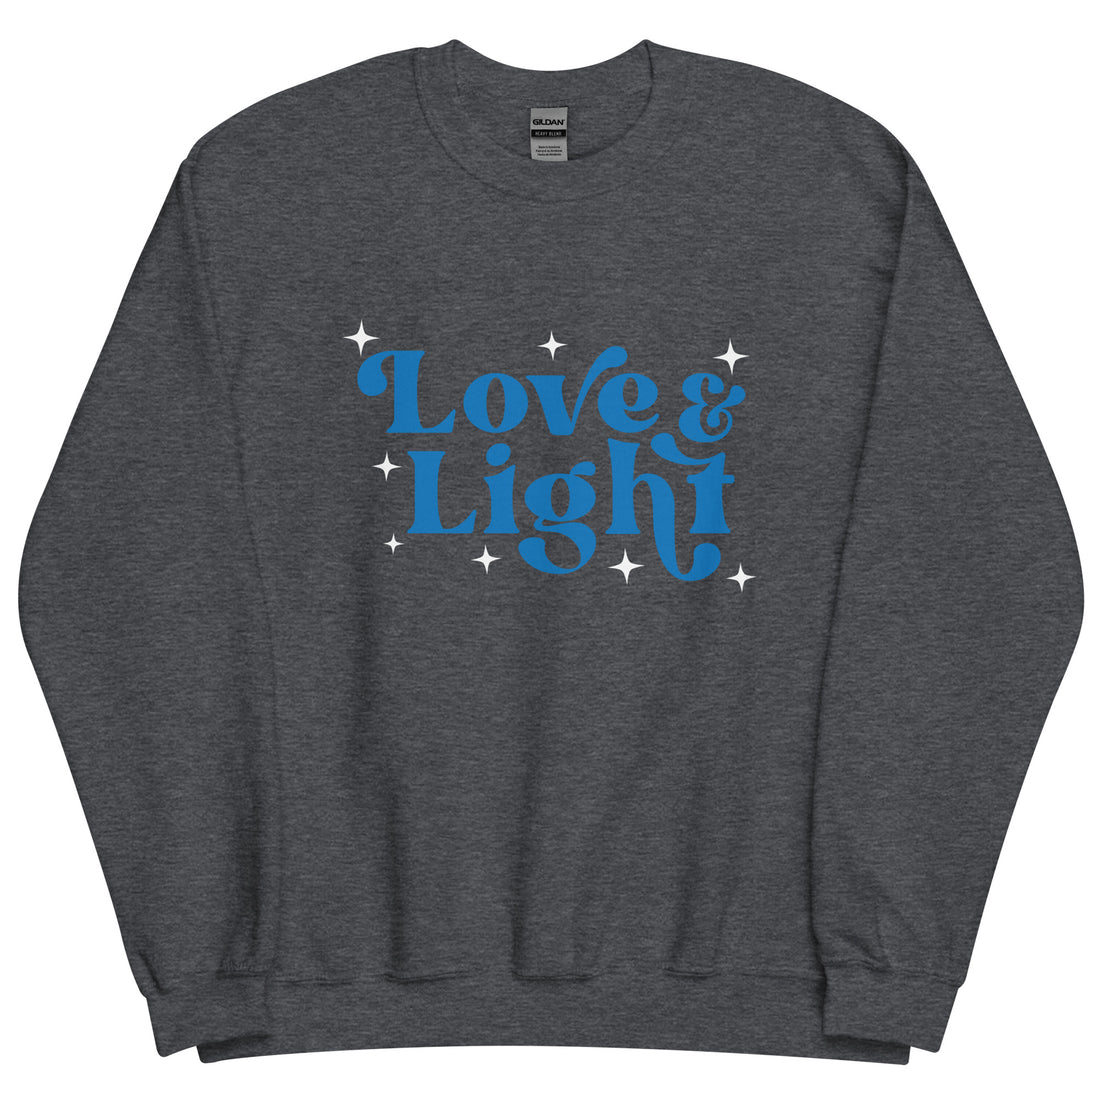 Love & Light Unisex Sweatshirt